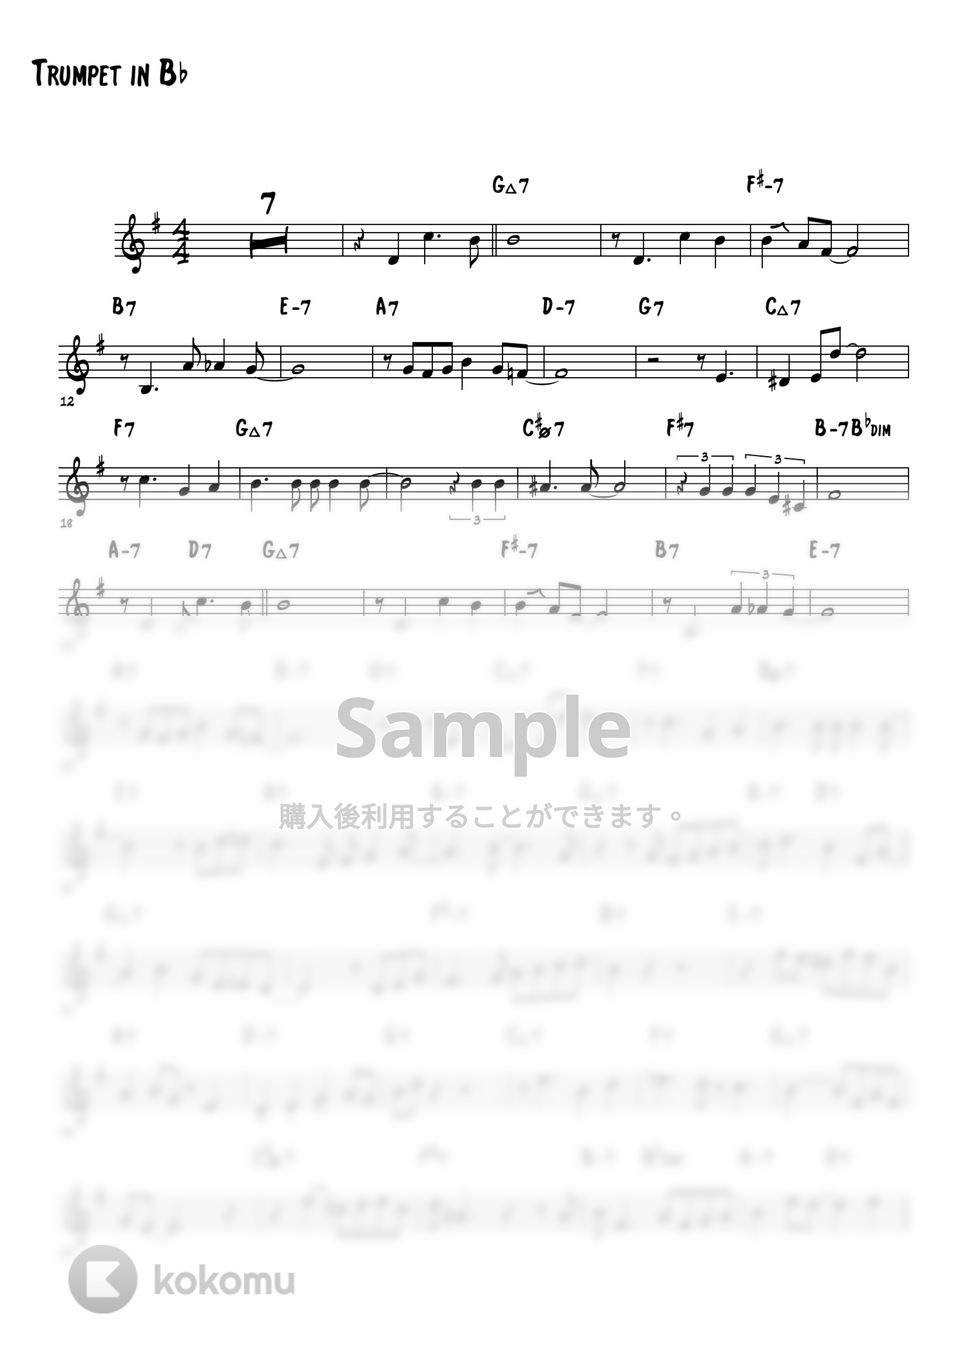 Billy Reid - I'll Close My Eyes (ジャズトランペット演奏例) by 高田将利